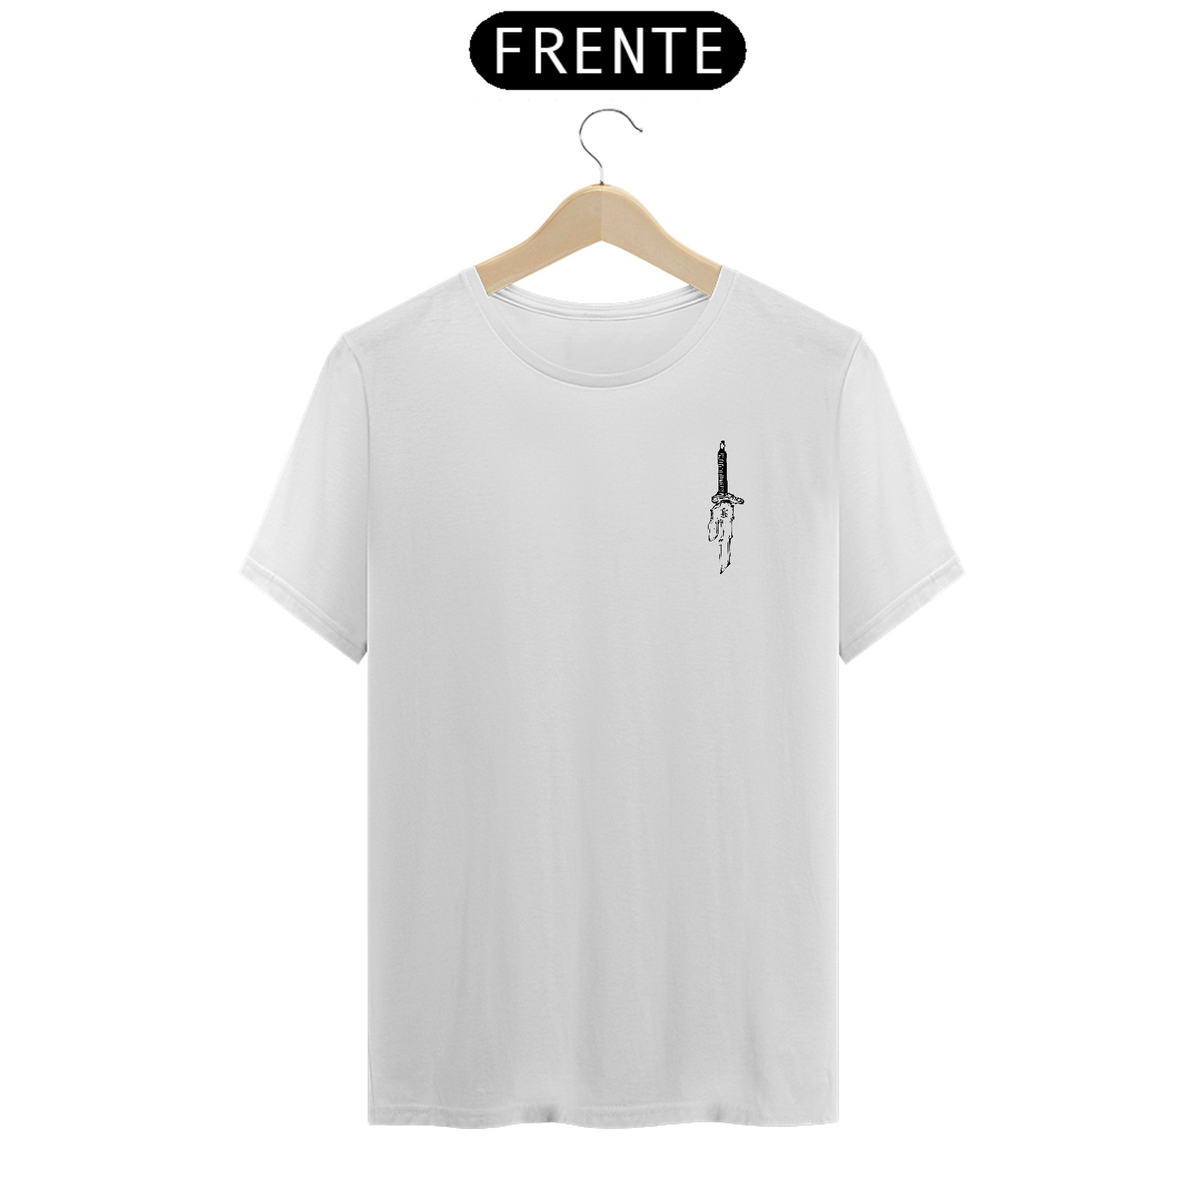 Nome do produto: Camiseta Branca - Inverted Spear Of Heaven